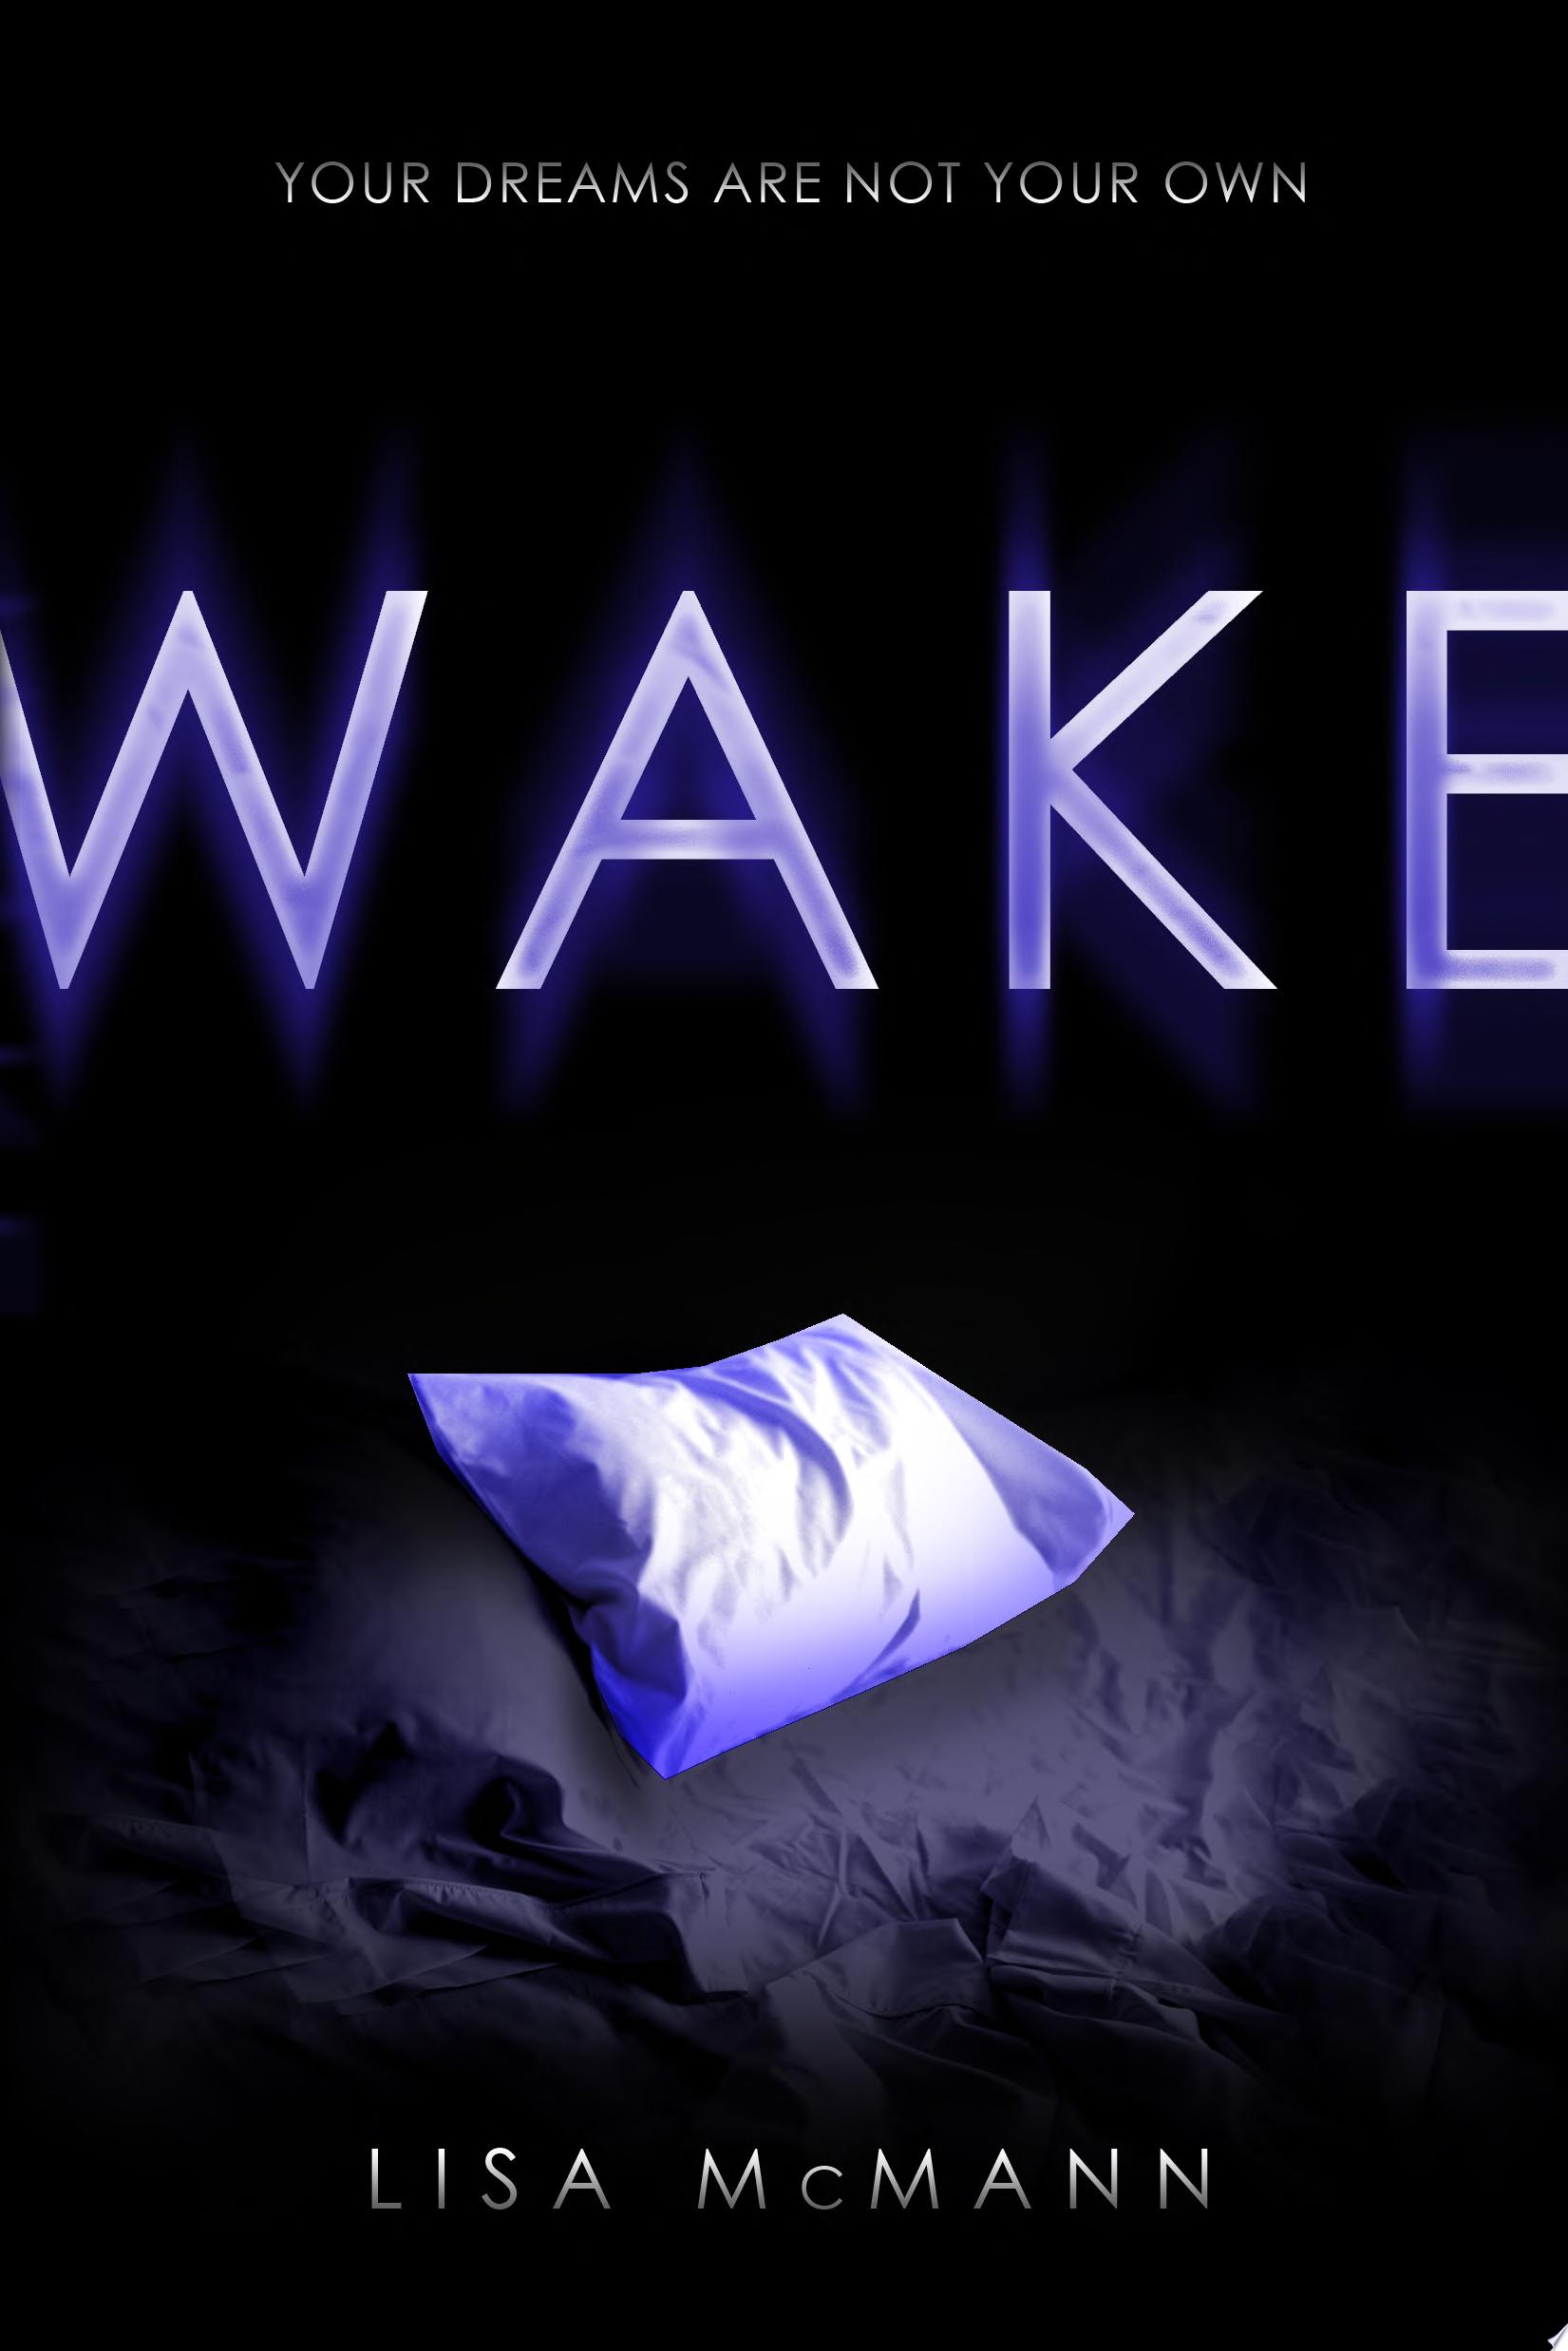 Image for "Wake"